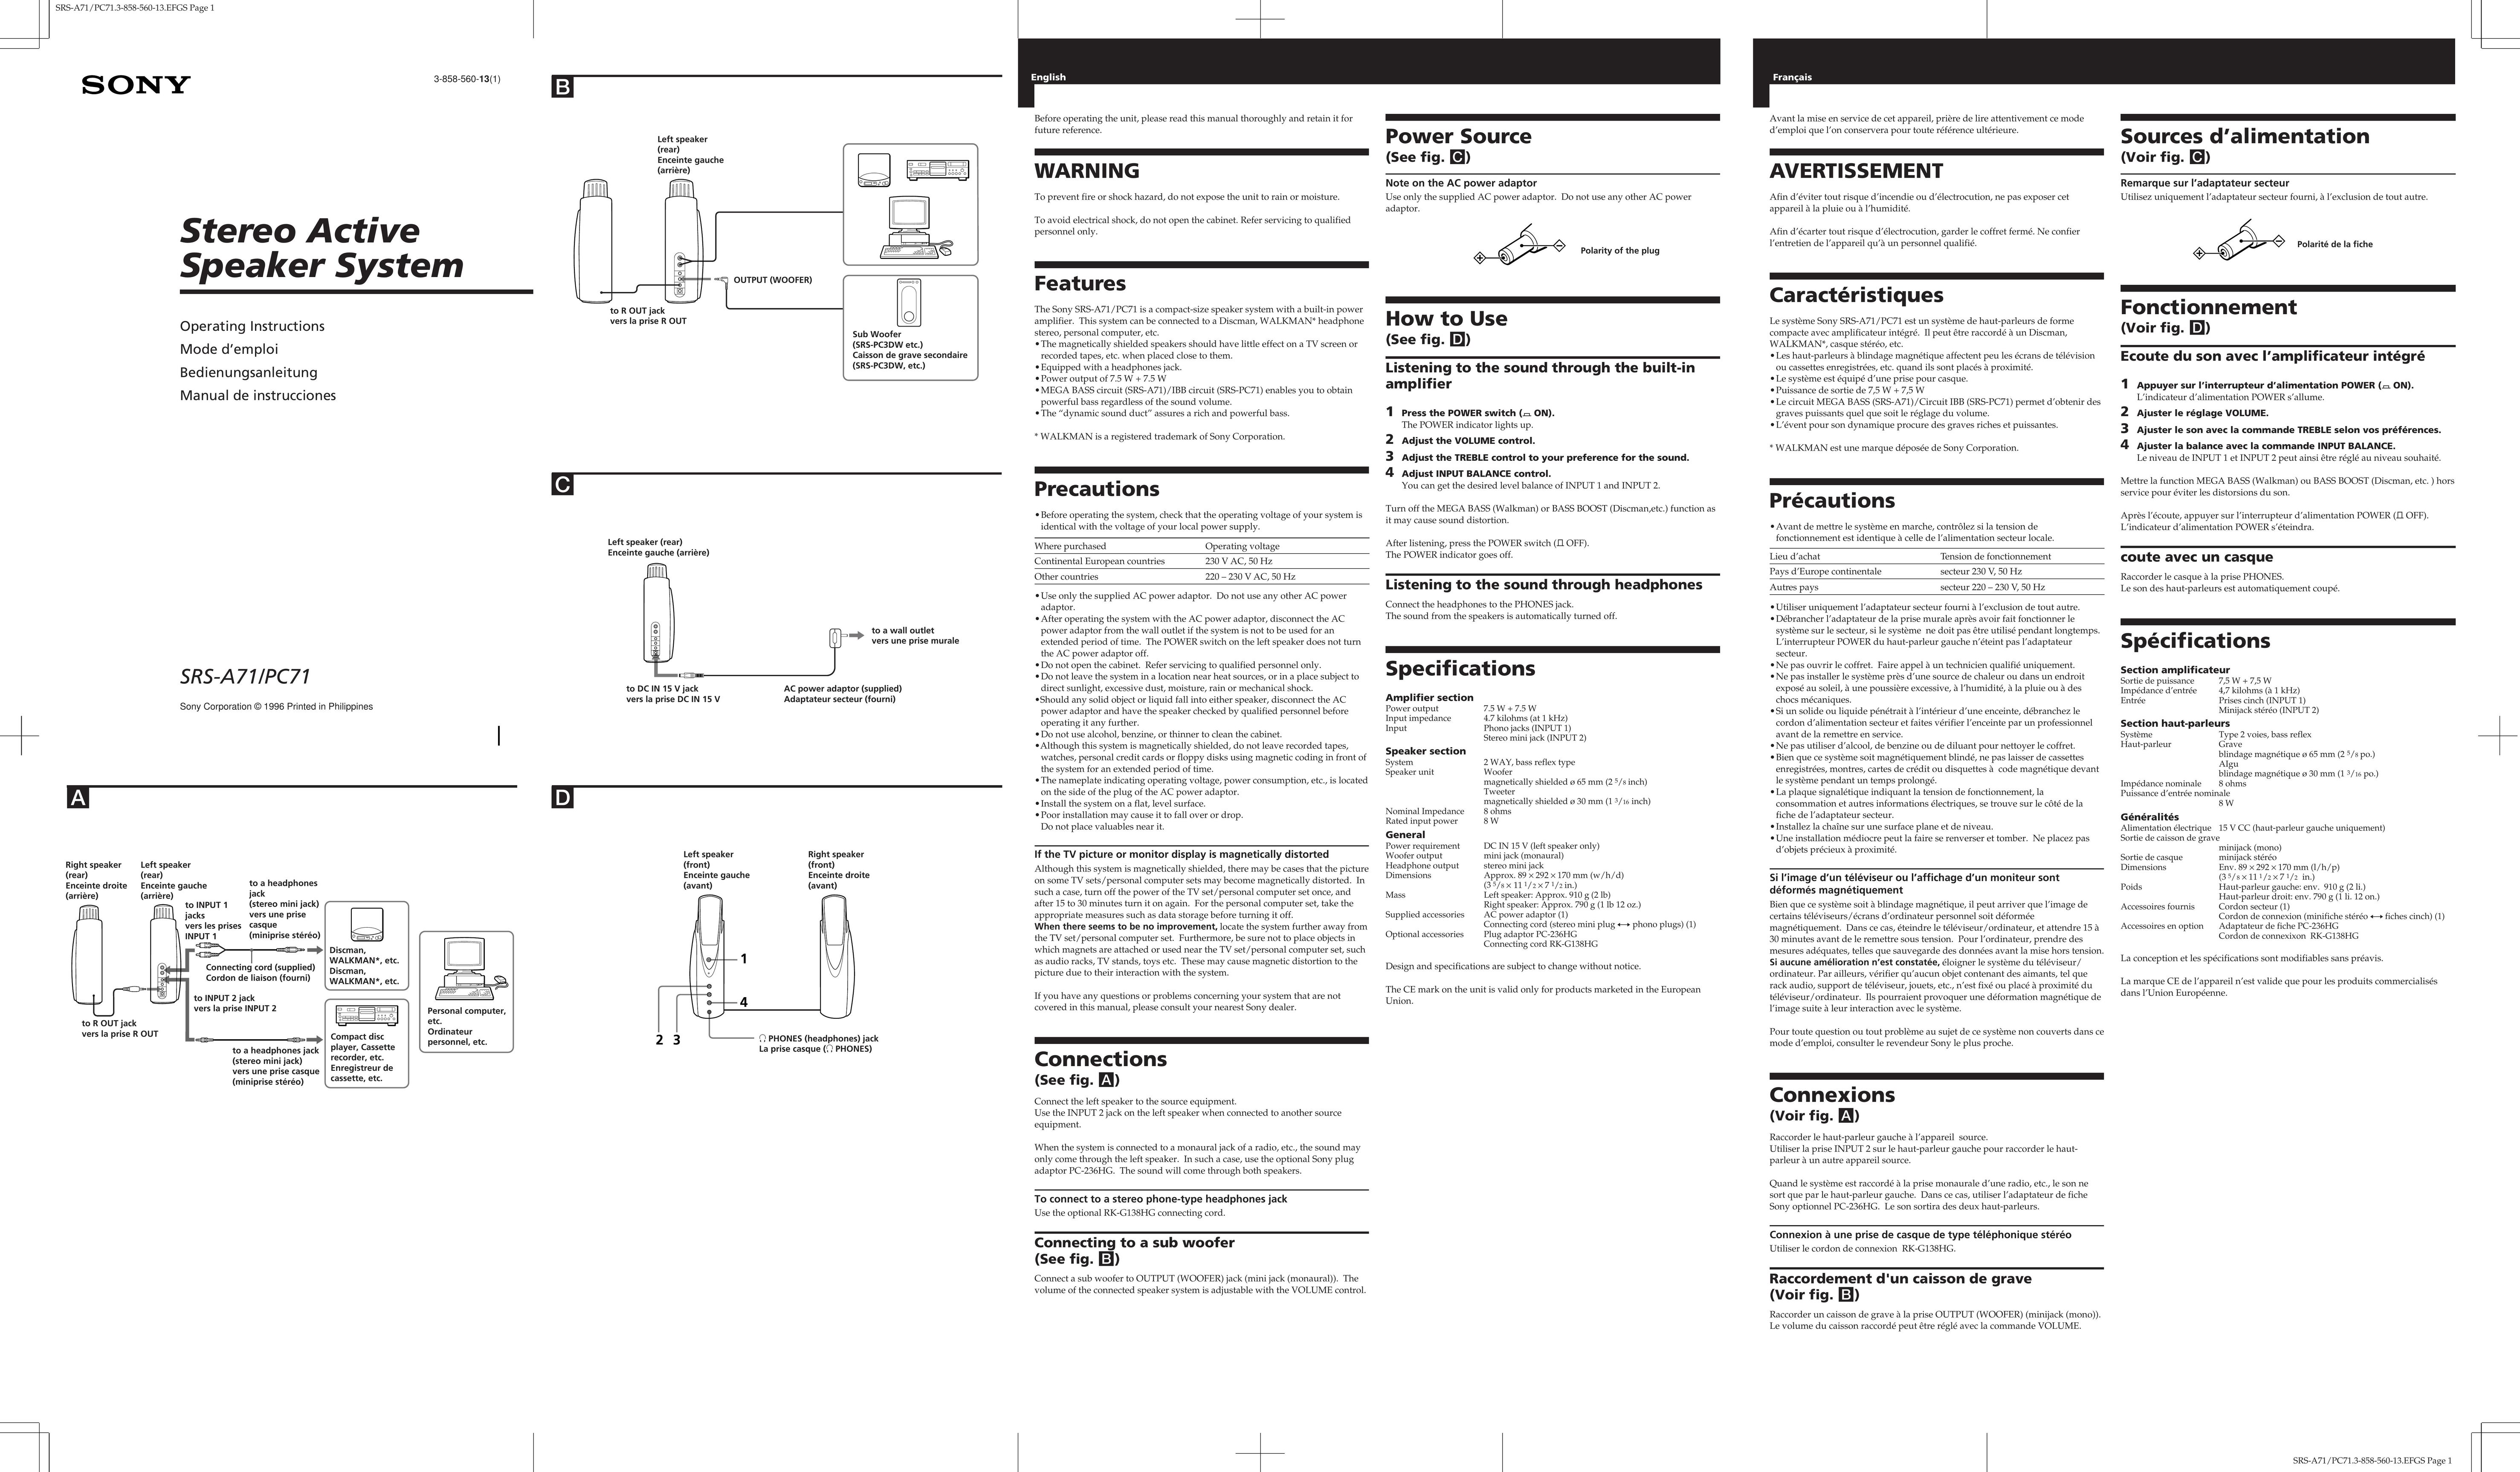 Sony SRS-PC71 Portable Speaker User Manual